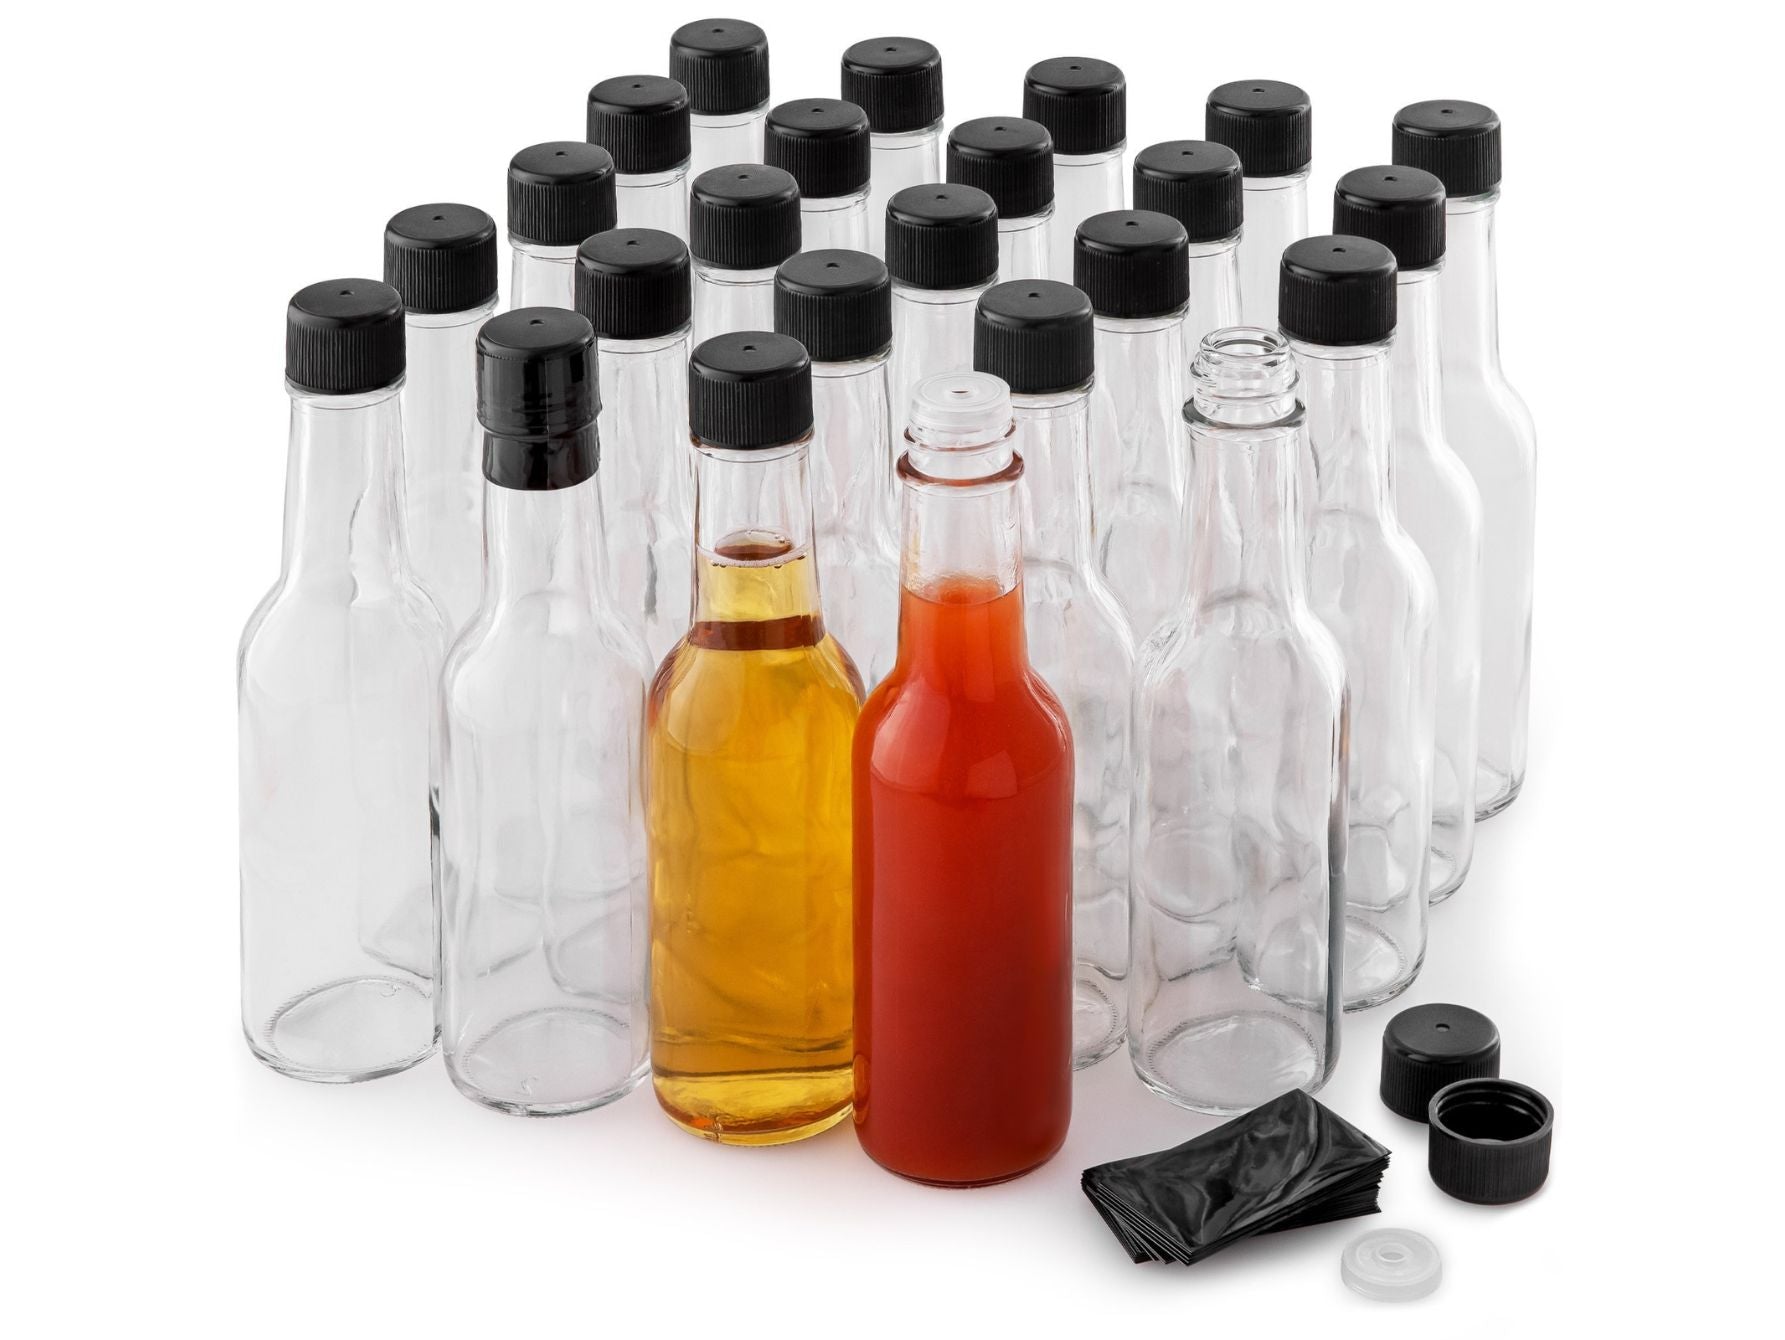 Simple Craft Hot Sauce Glass Bottles (5 oz) - 24 Pcs